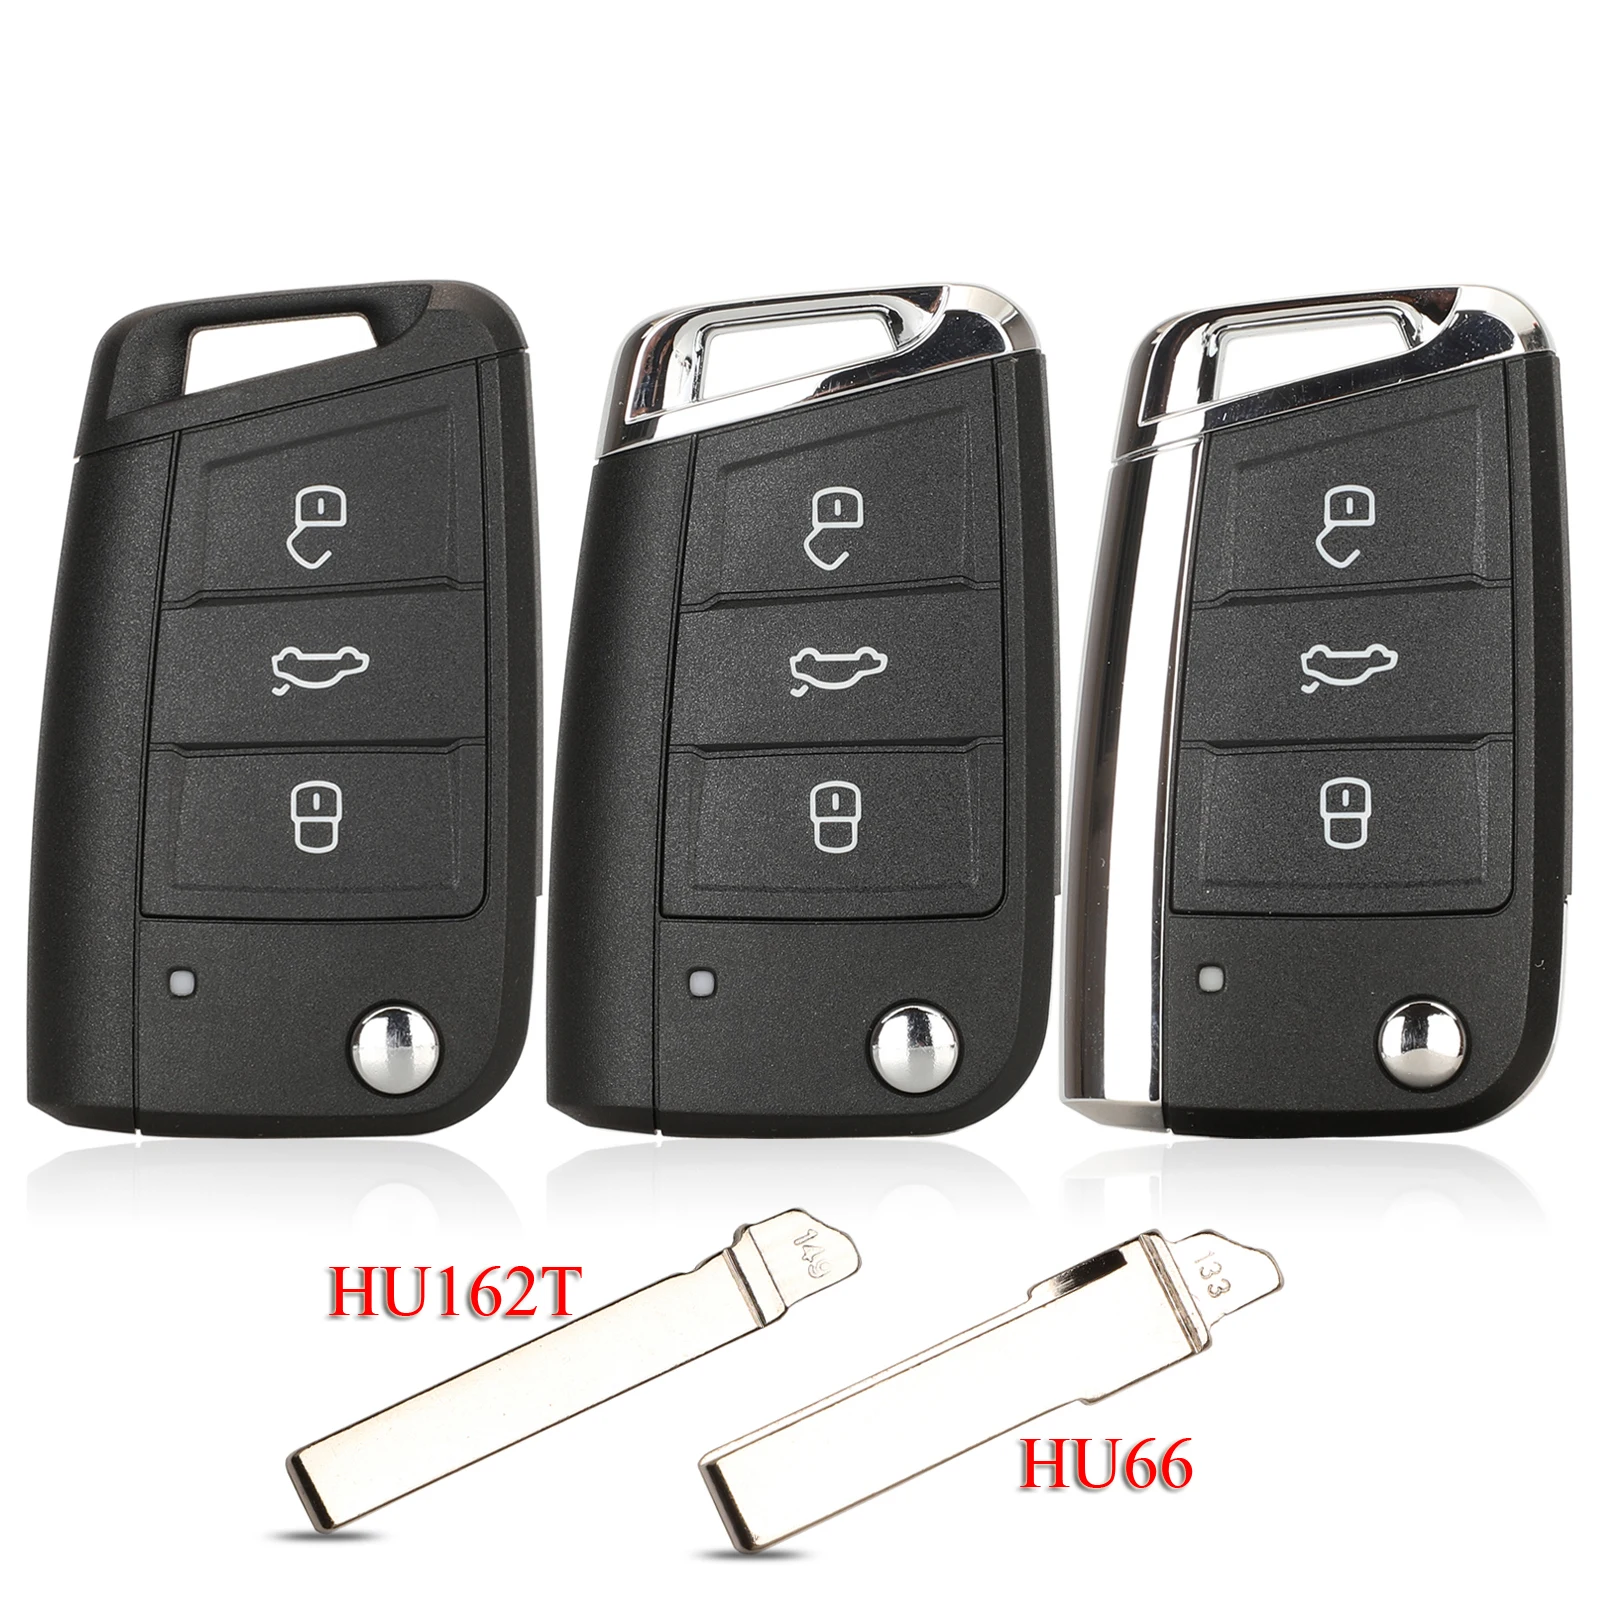 jingyuqin Folding Key Shell For Volkswagen VW Golf7 MK7 Skoda Seat 3Buttons Remote Car Key Case Cover With HU66/HU162T Blade